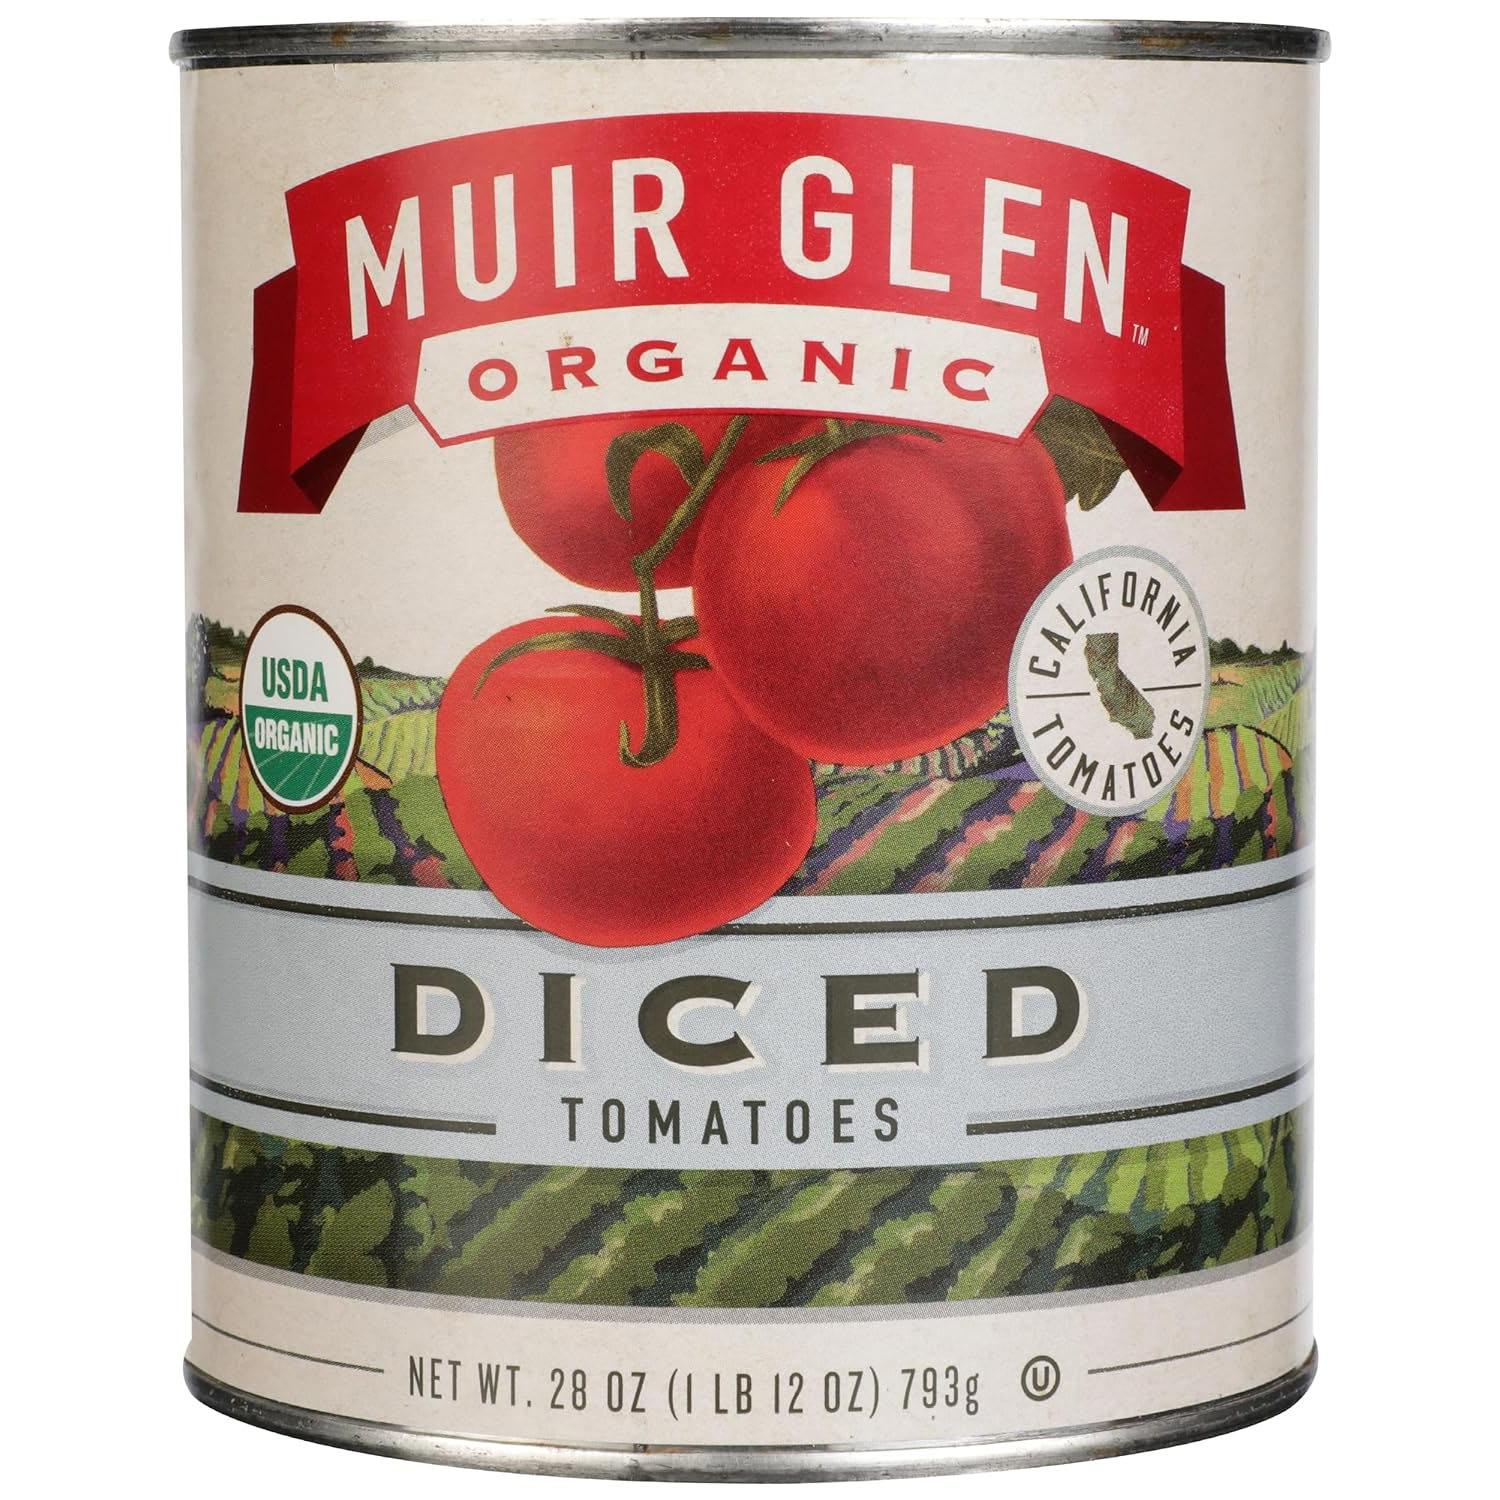 Muir Glen Organic Diced Tomatoes for $2.90